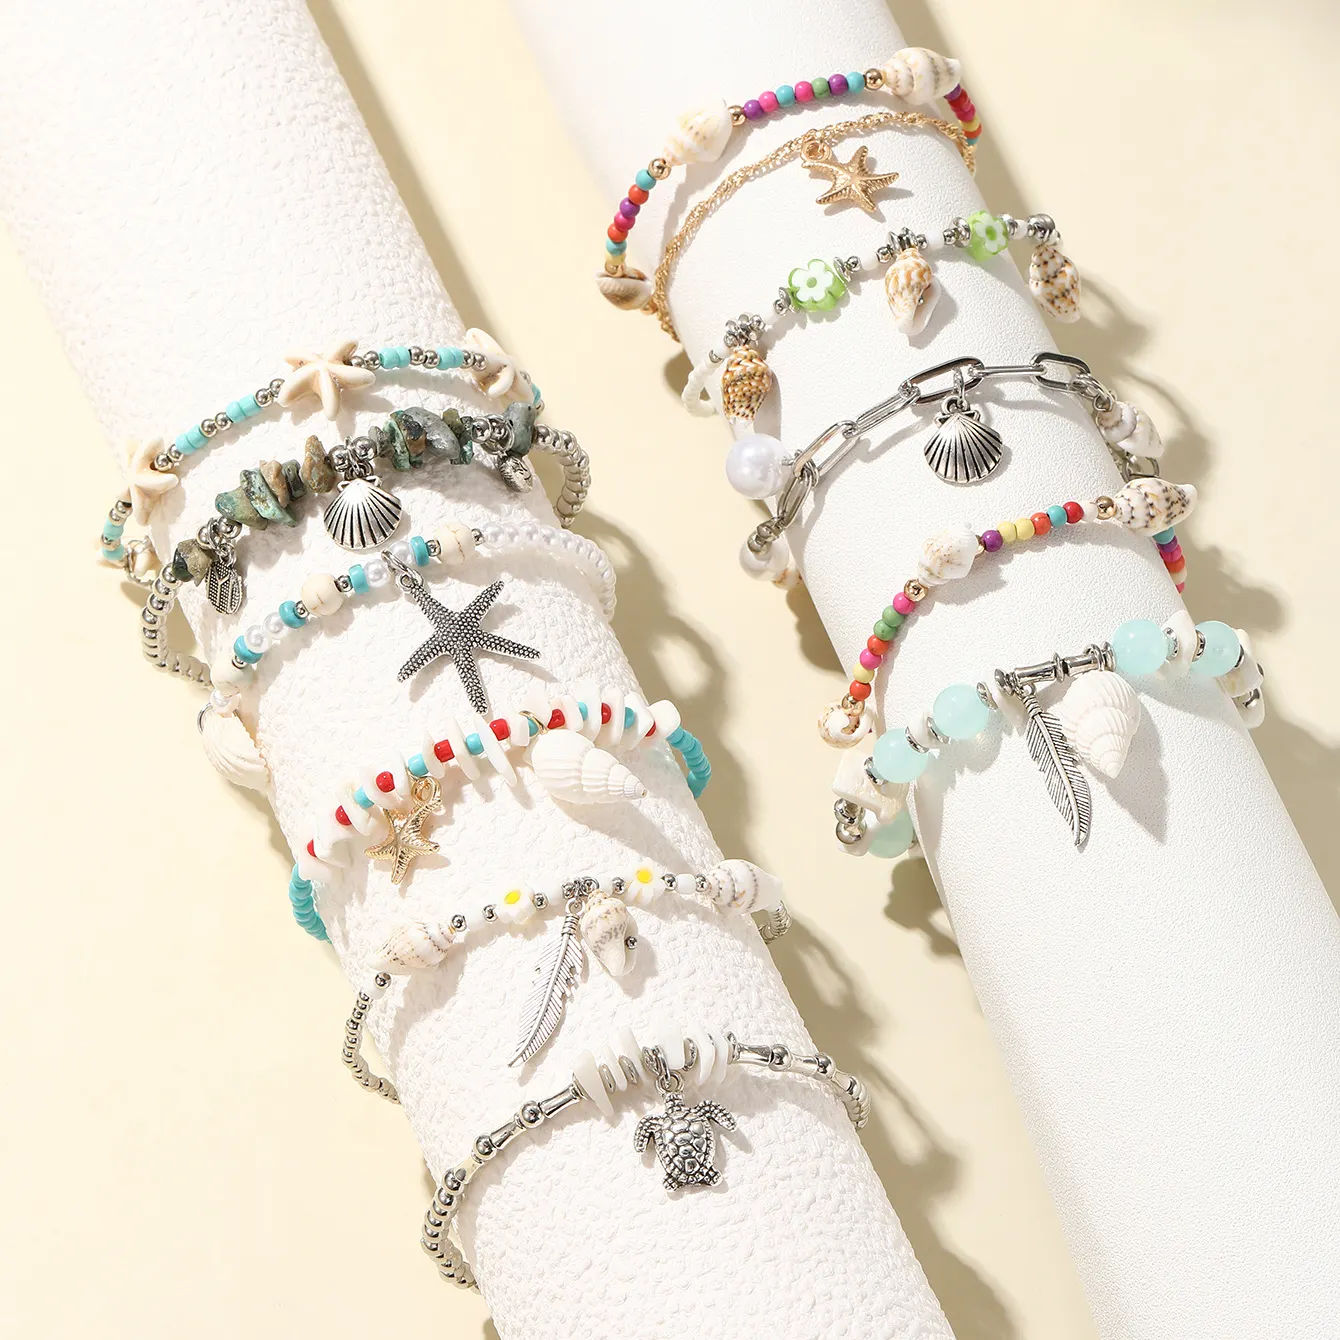 Boho Starfish Conch Shell Beads Bracelet For Women Beach Jewelry Handmade Adjustable Charm Pendant Bracelets